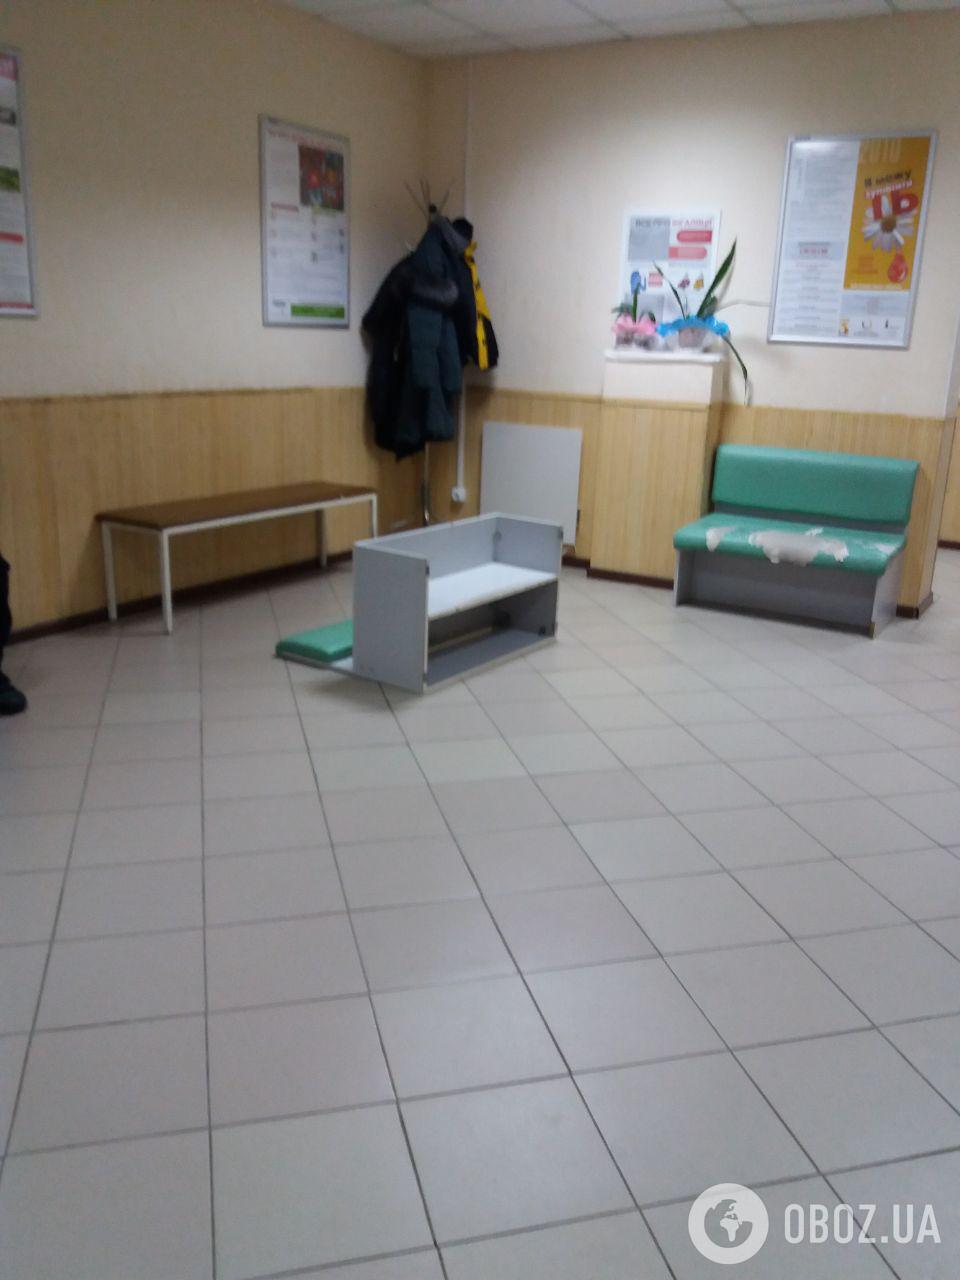 Амбулатория семейно медицины на Теремках. Взгляд изнутри